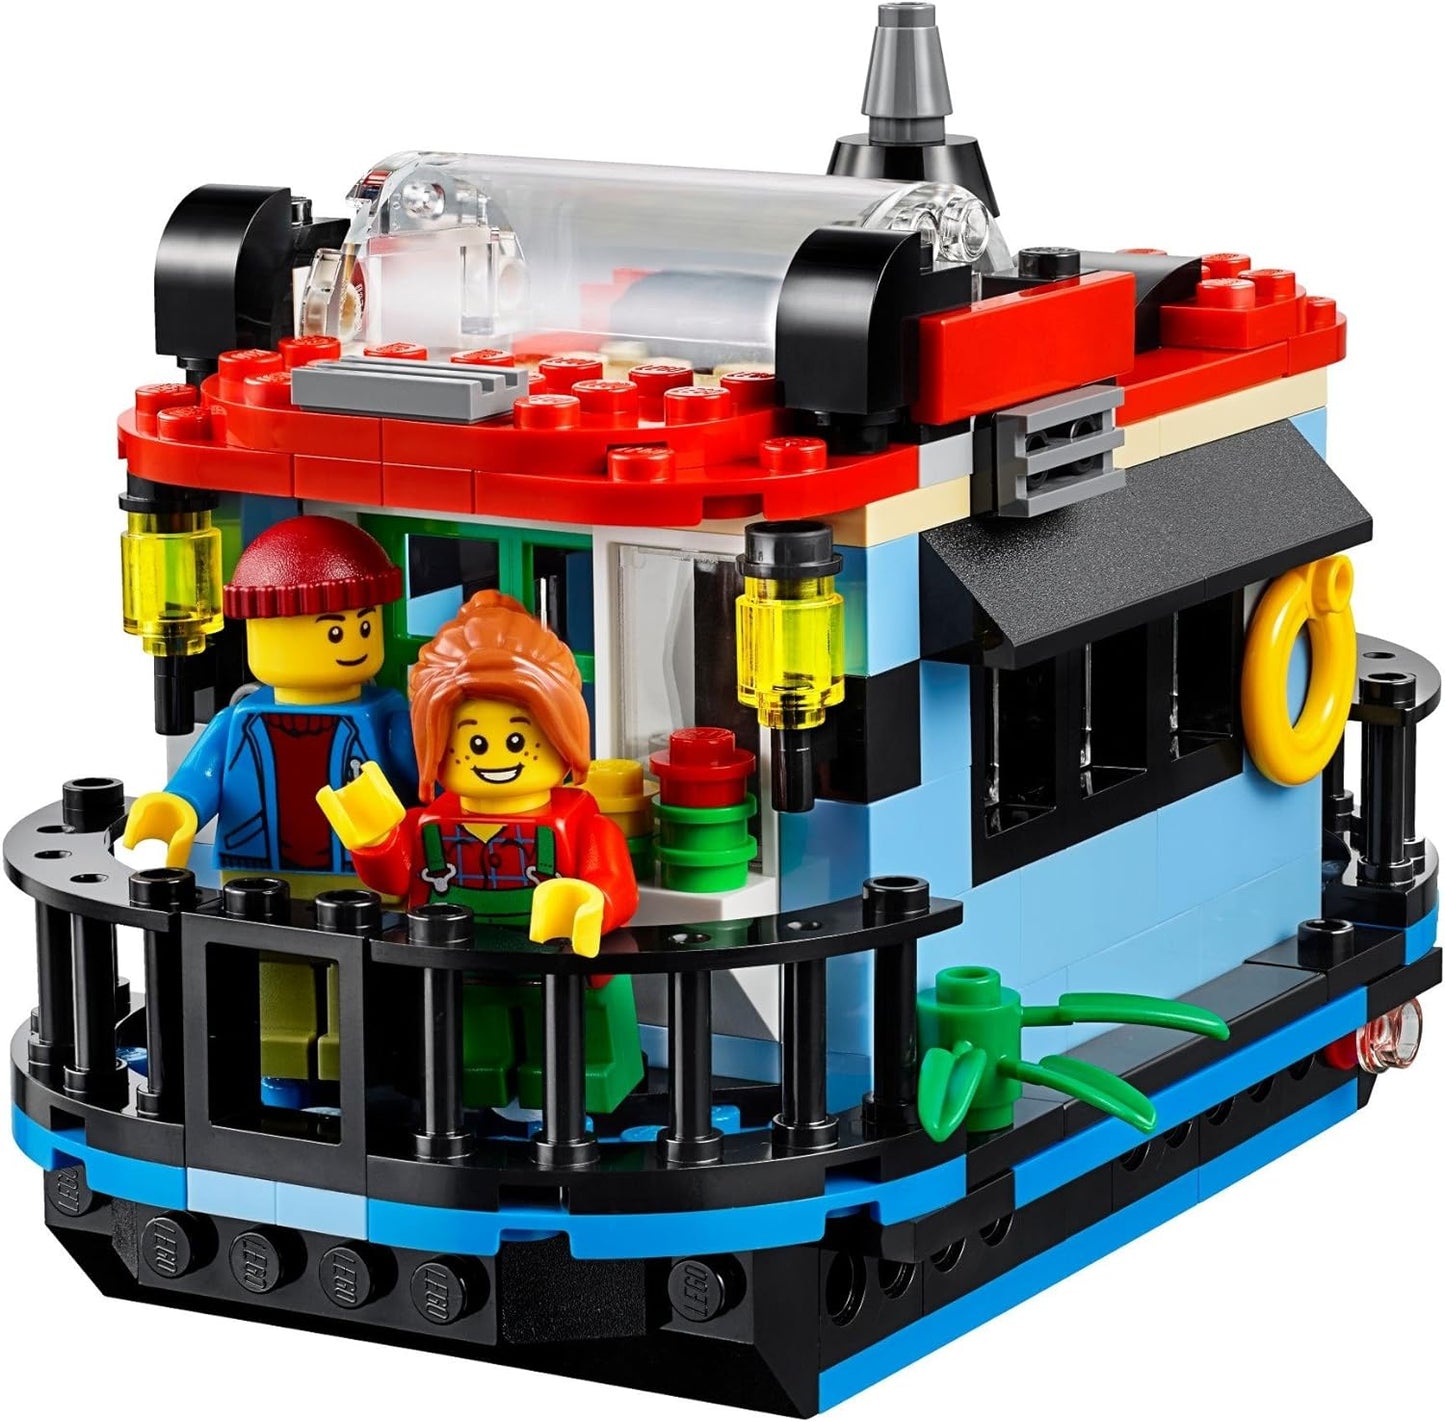 LEGO Creator 31051 Lighthouse Point Building Kit (528 Piece)